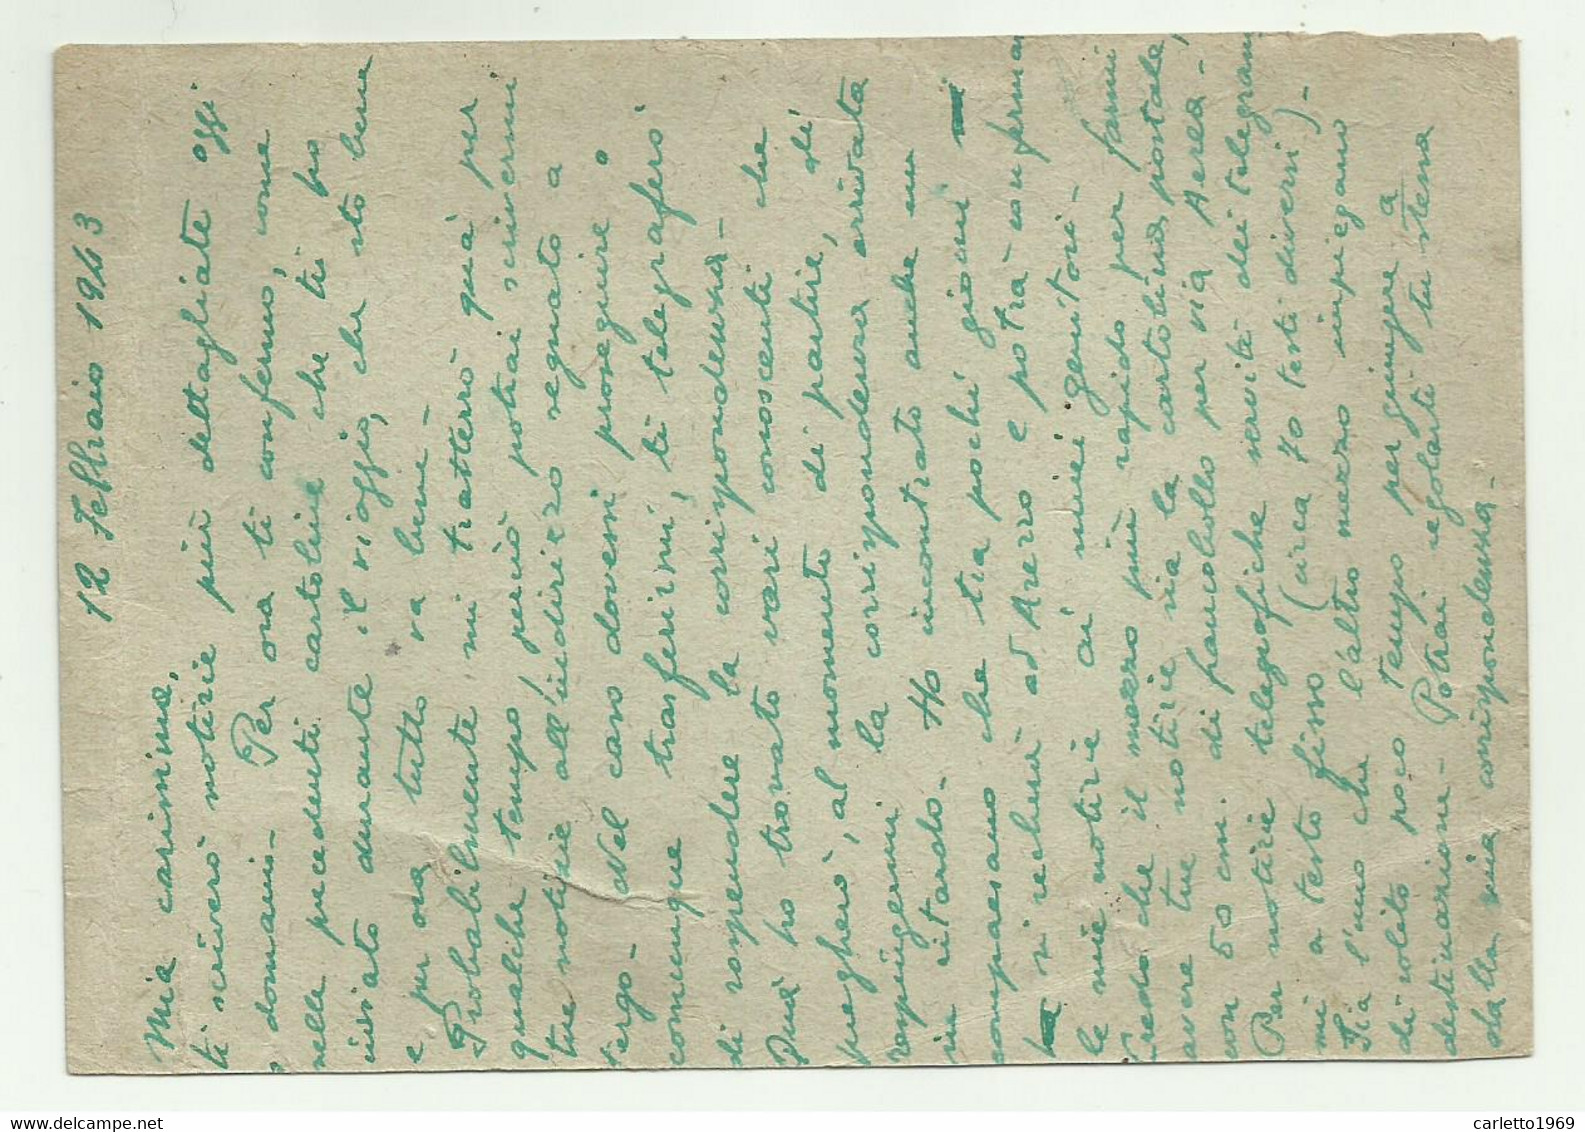 CARTOLINA FORZE ARMATE - COMANDO AERONAUTICA GRECIA PM 23 VIA AEREA 1943 - Stamped Stationery